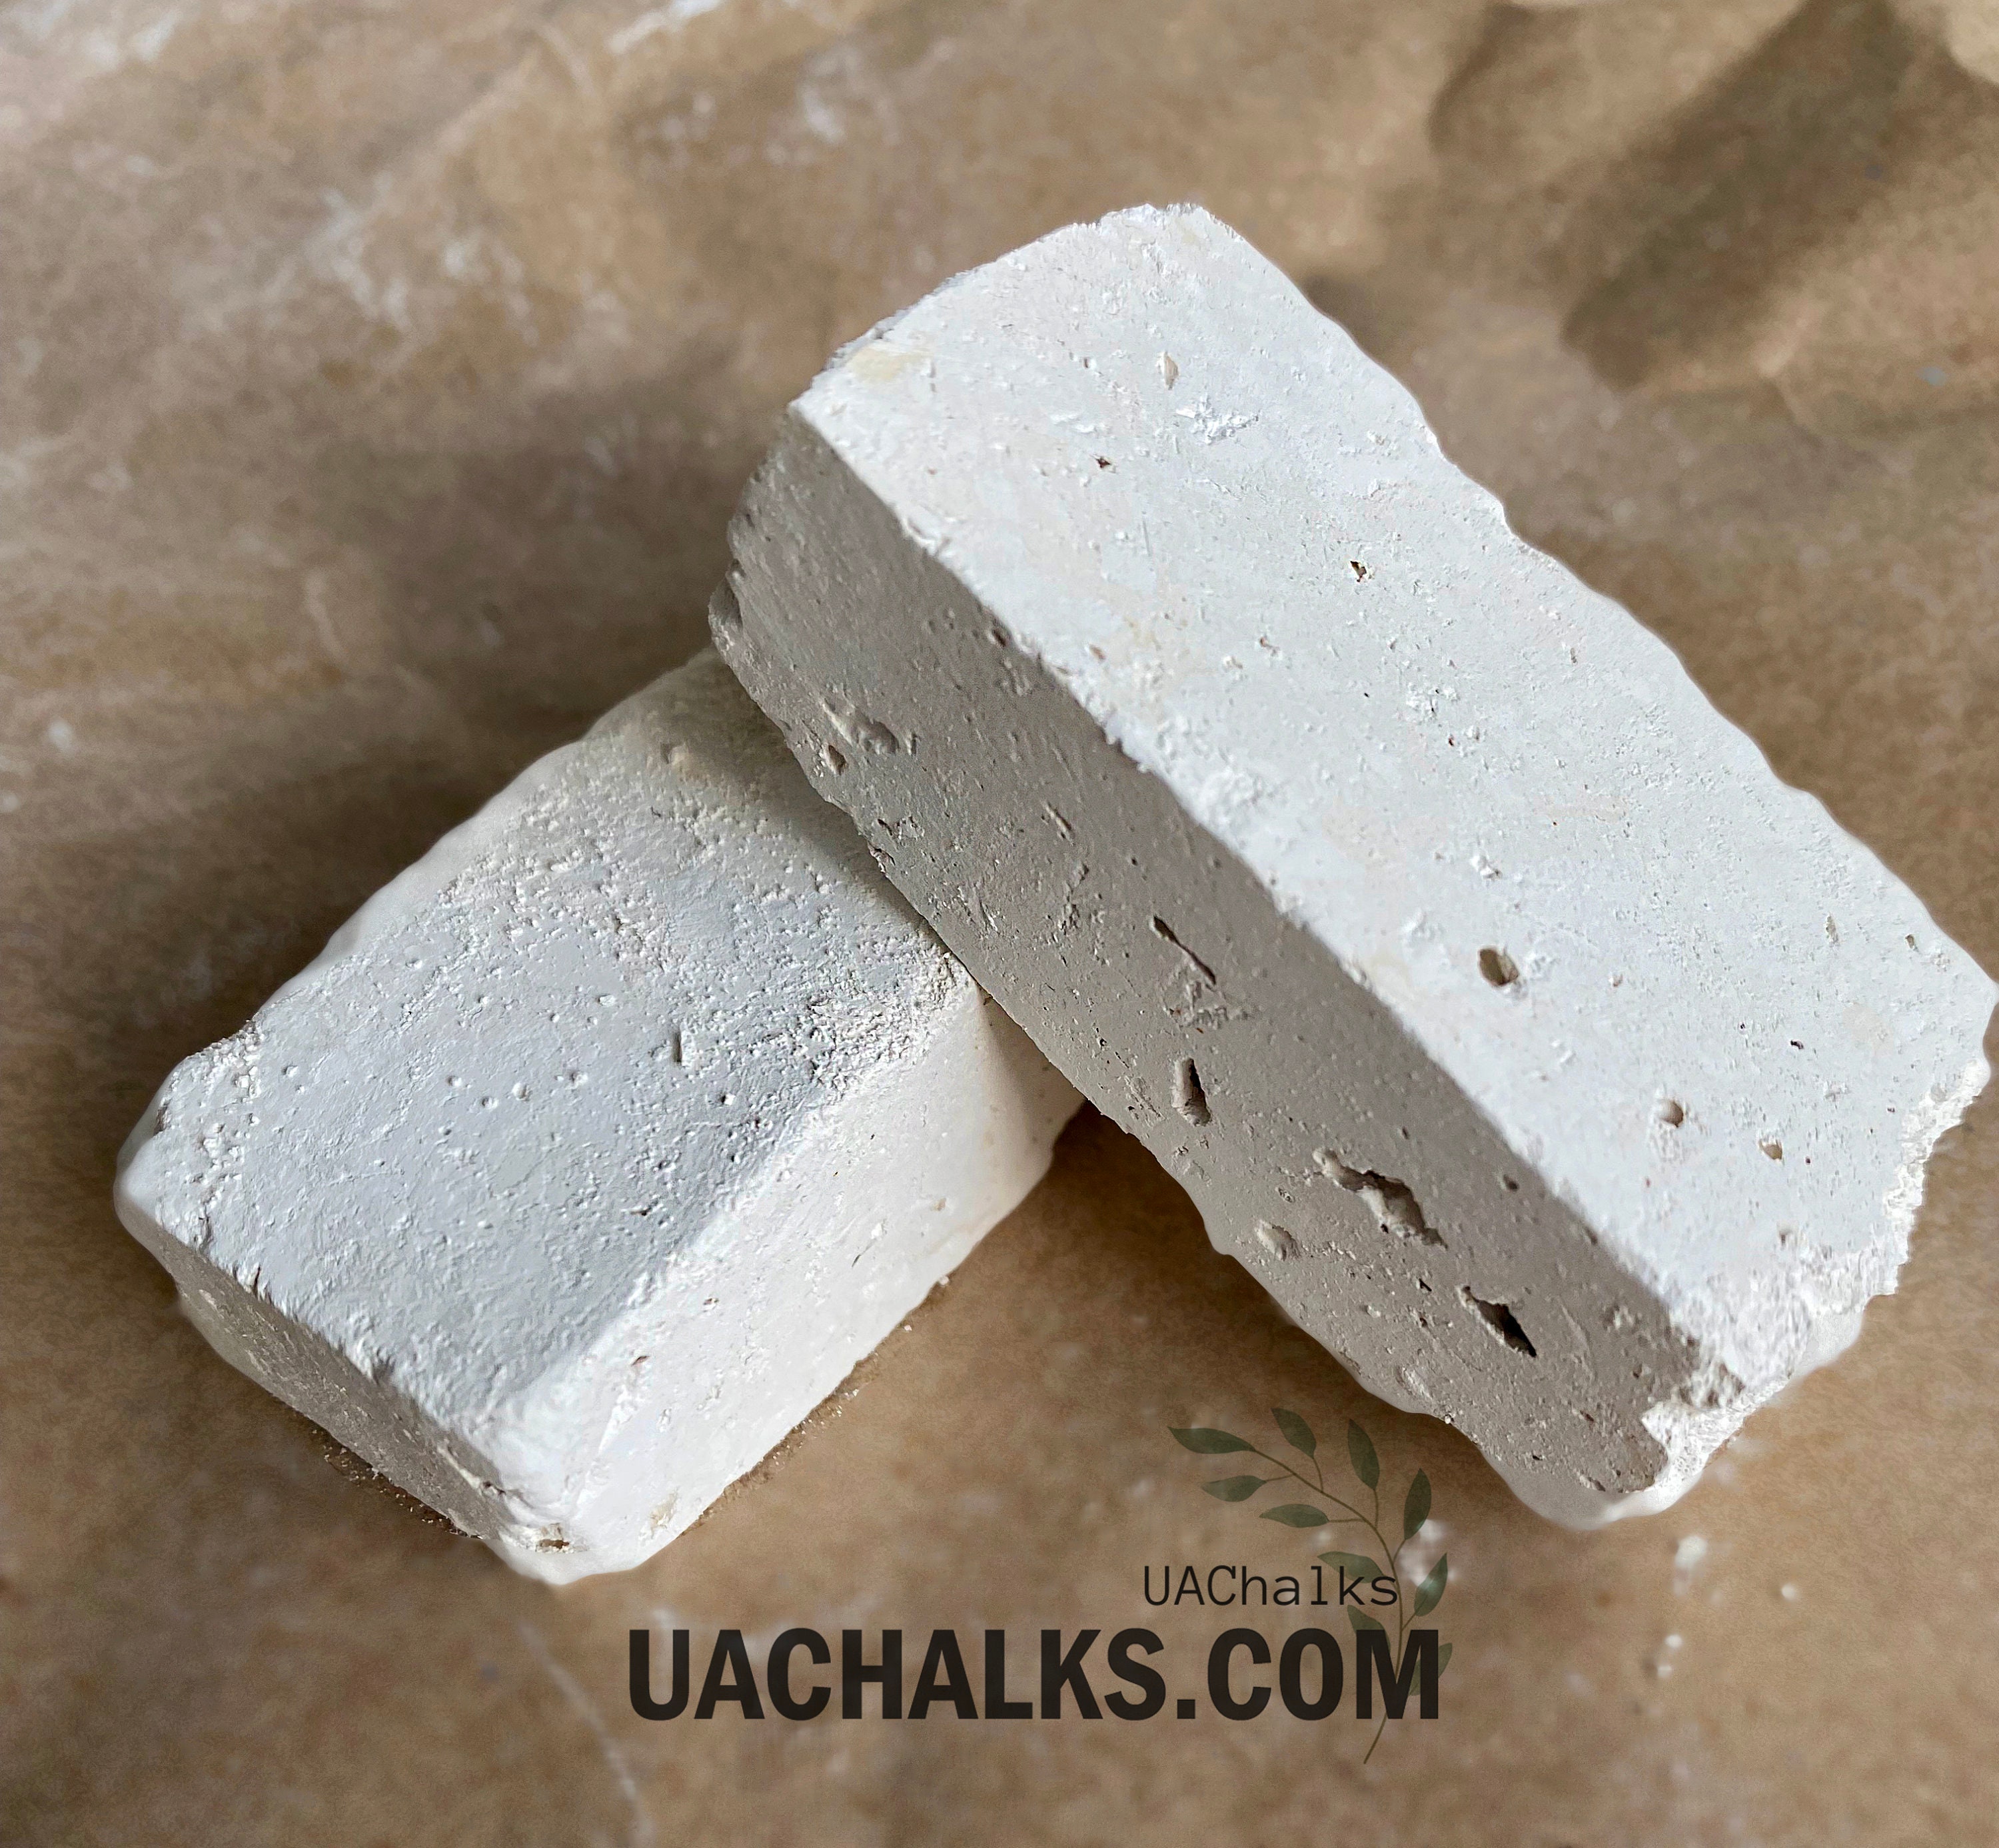 Chalkovsky Premium Edible Chalk - Natural Chalk for Eating - Crunchy Belgorod Chalk Chunks - Russian Organic Chalk for Bone Strength - Zero Additives